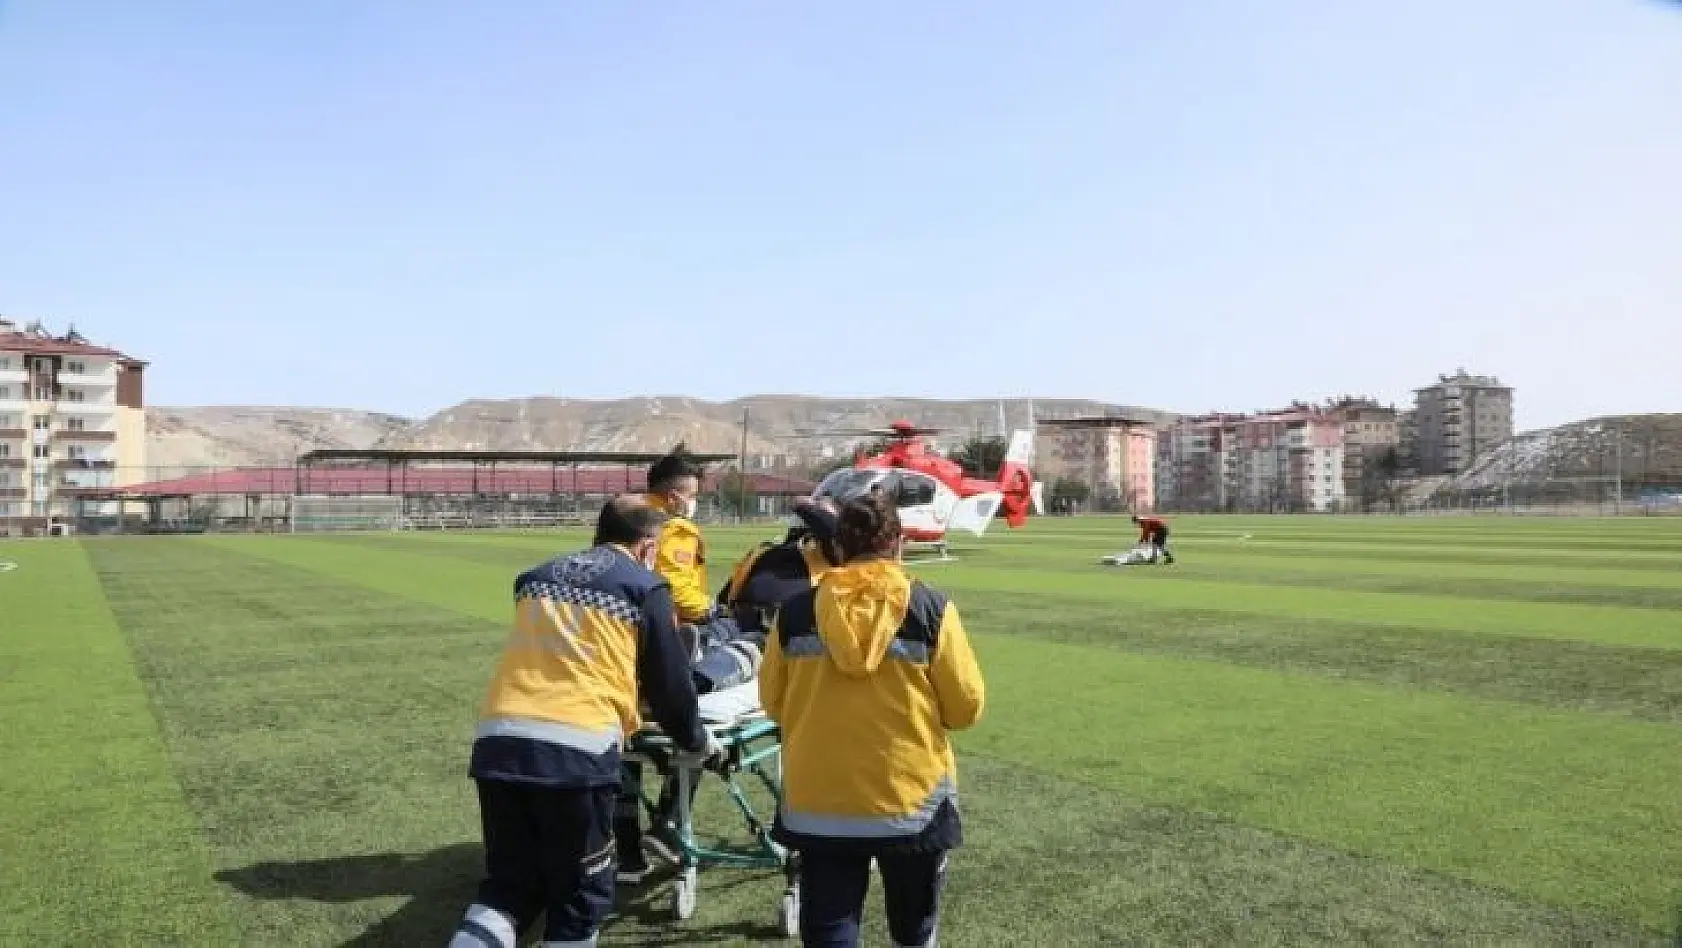 Kalp krizi geçiren 112 personeline ambulans helikopter yetişti